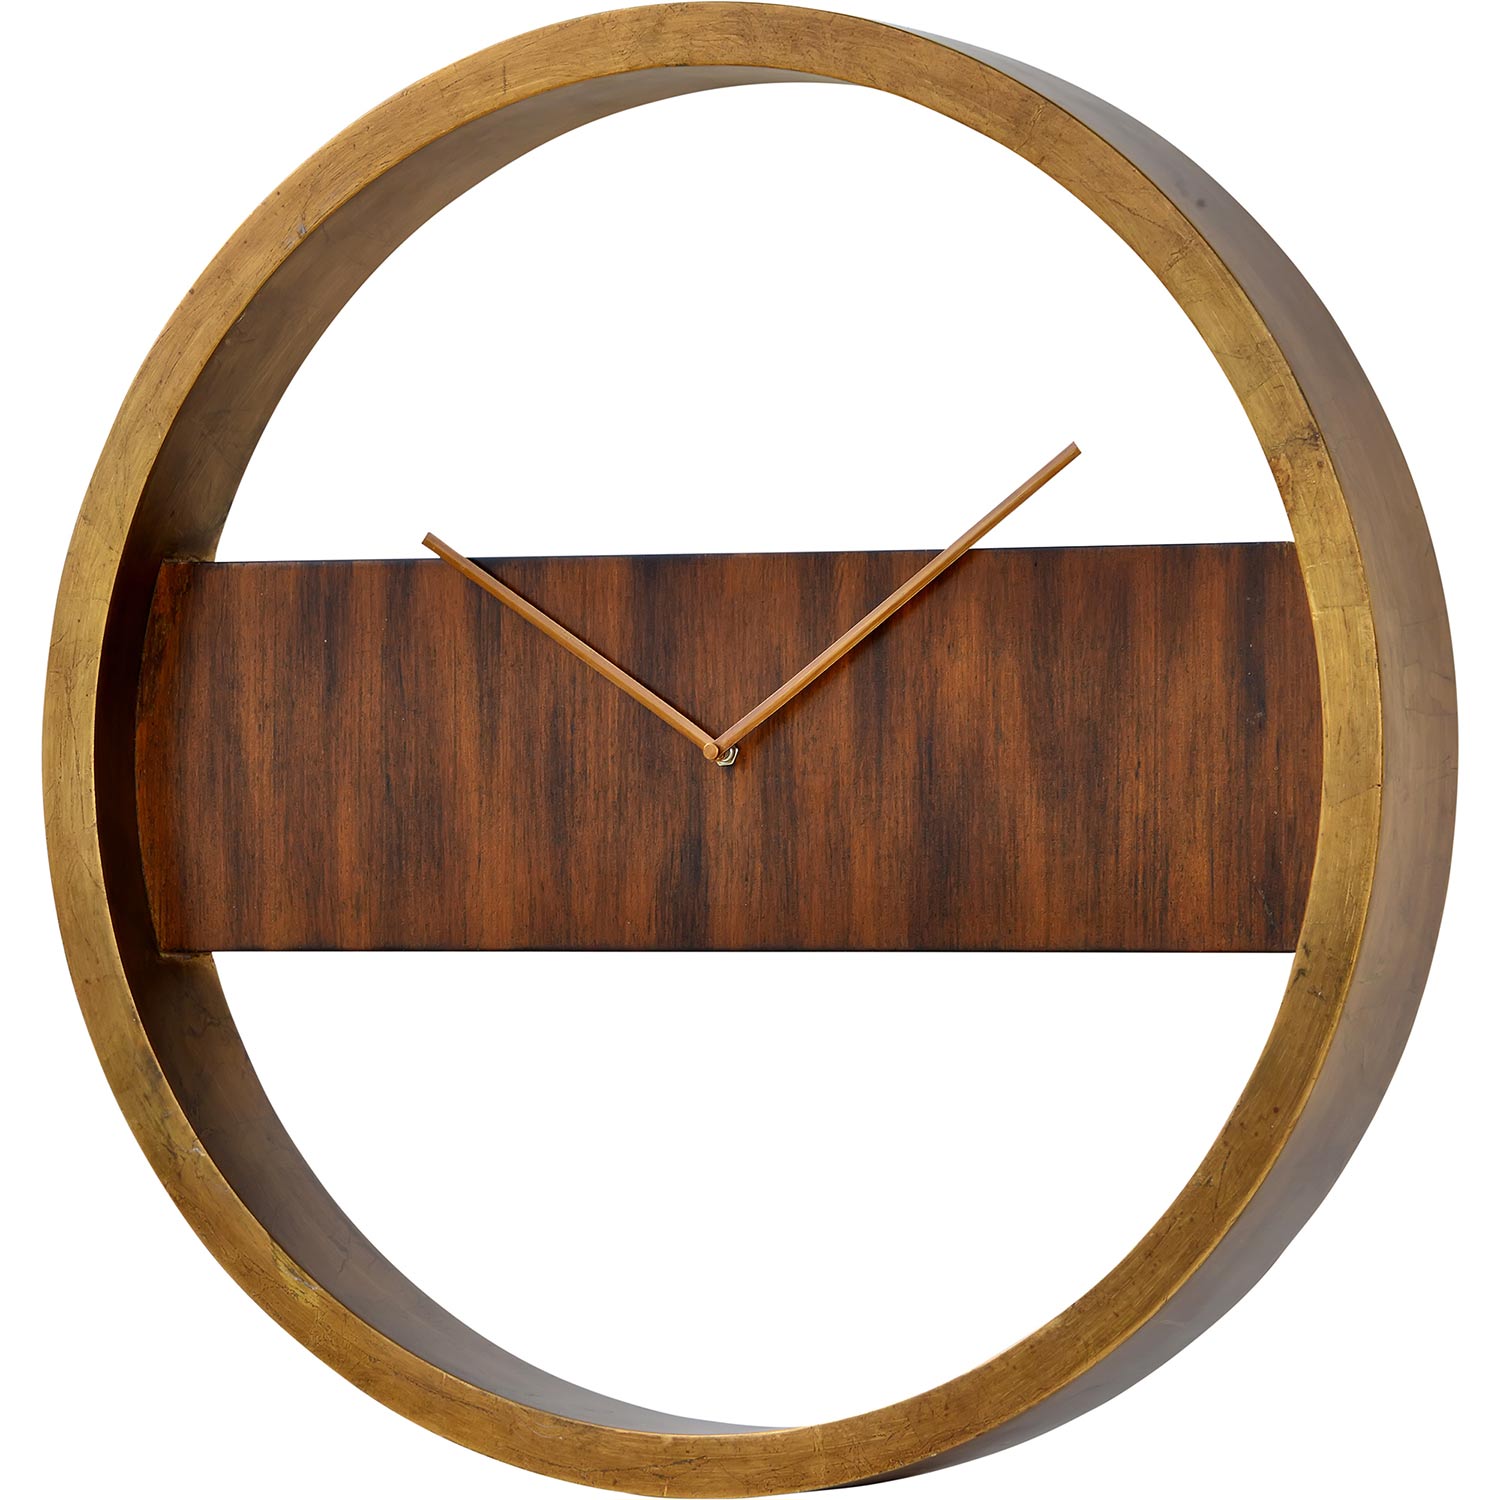 Ren-Wil Boyd Wall Clock - Handpainted Gold/Walnut/Antique Brass